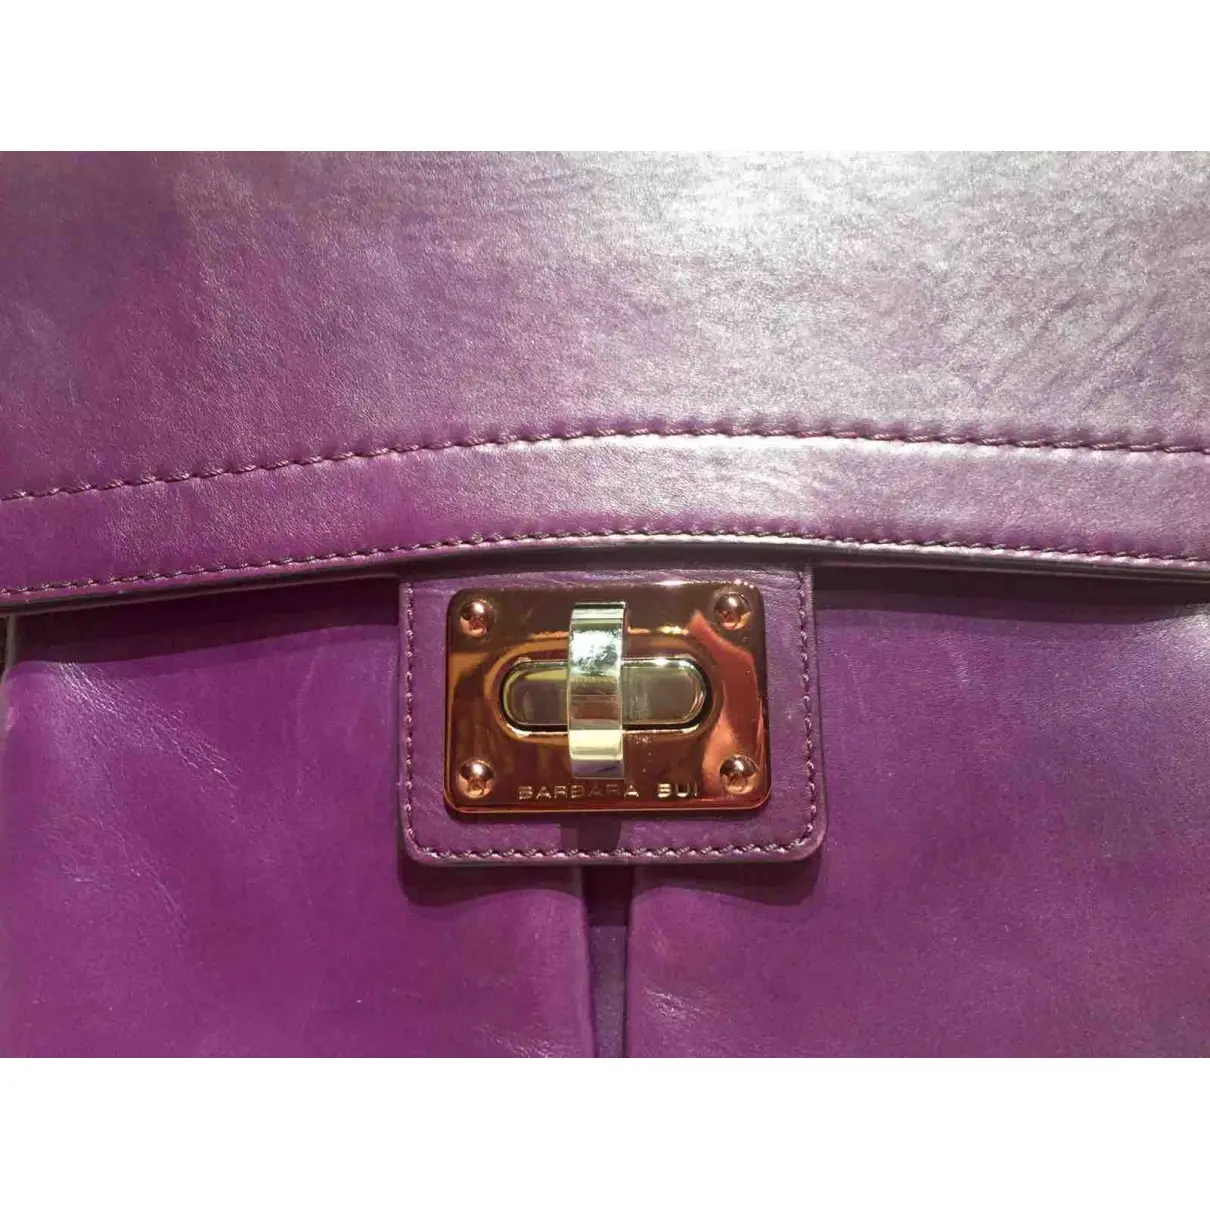 Barbara Bui Leather handbag for sale